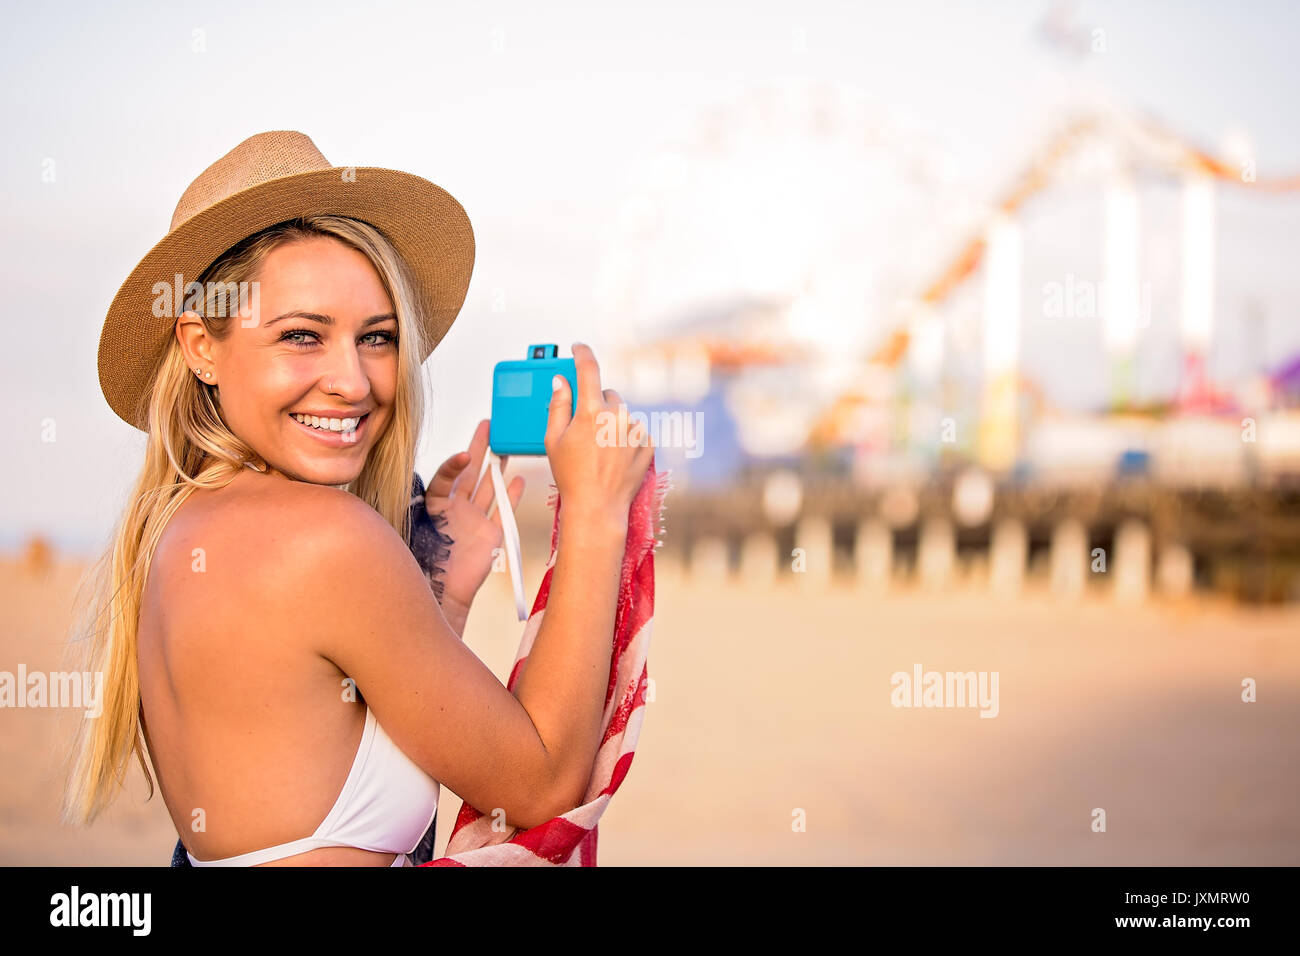 Portrait of young woman in bikini top photographing beach amusement park, Santa Monica, California, USA Stock Photo